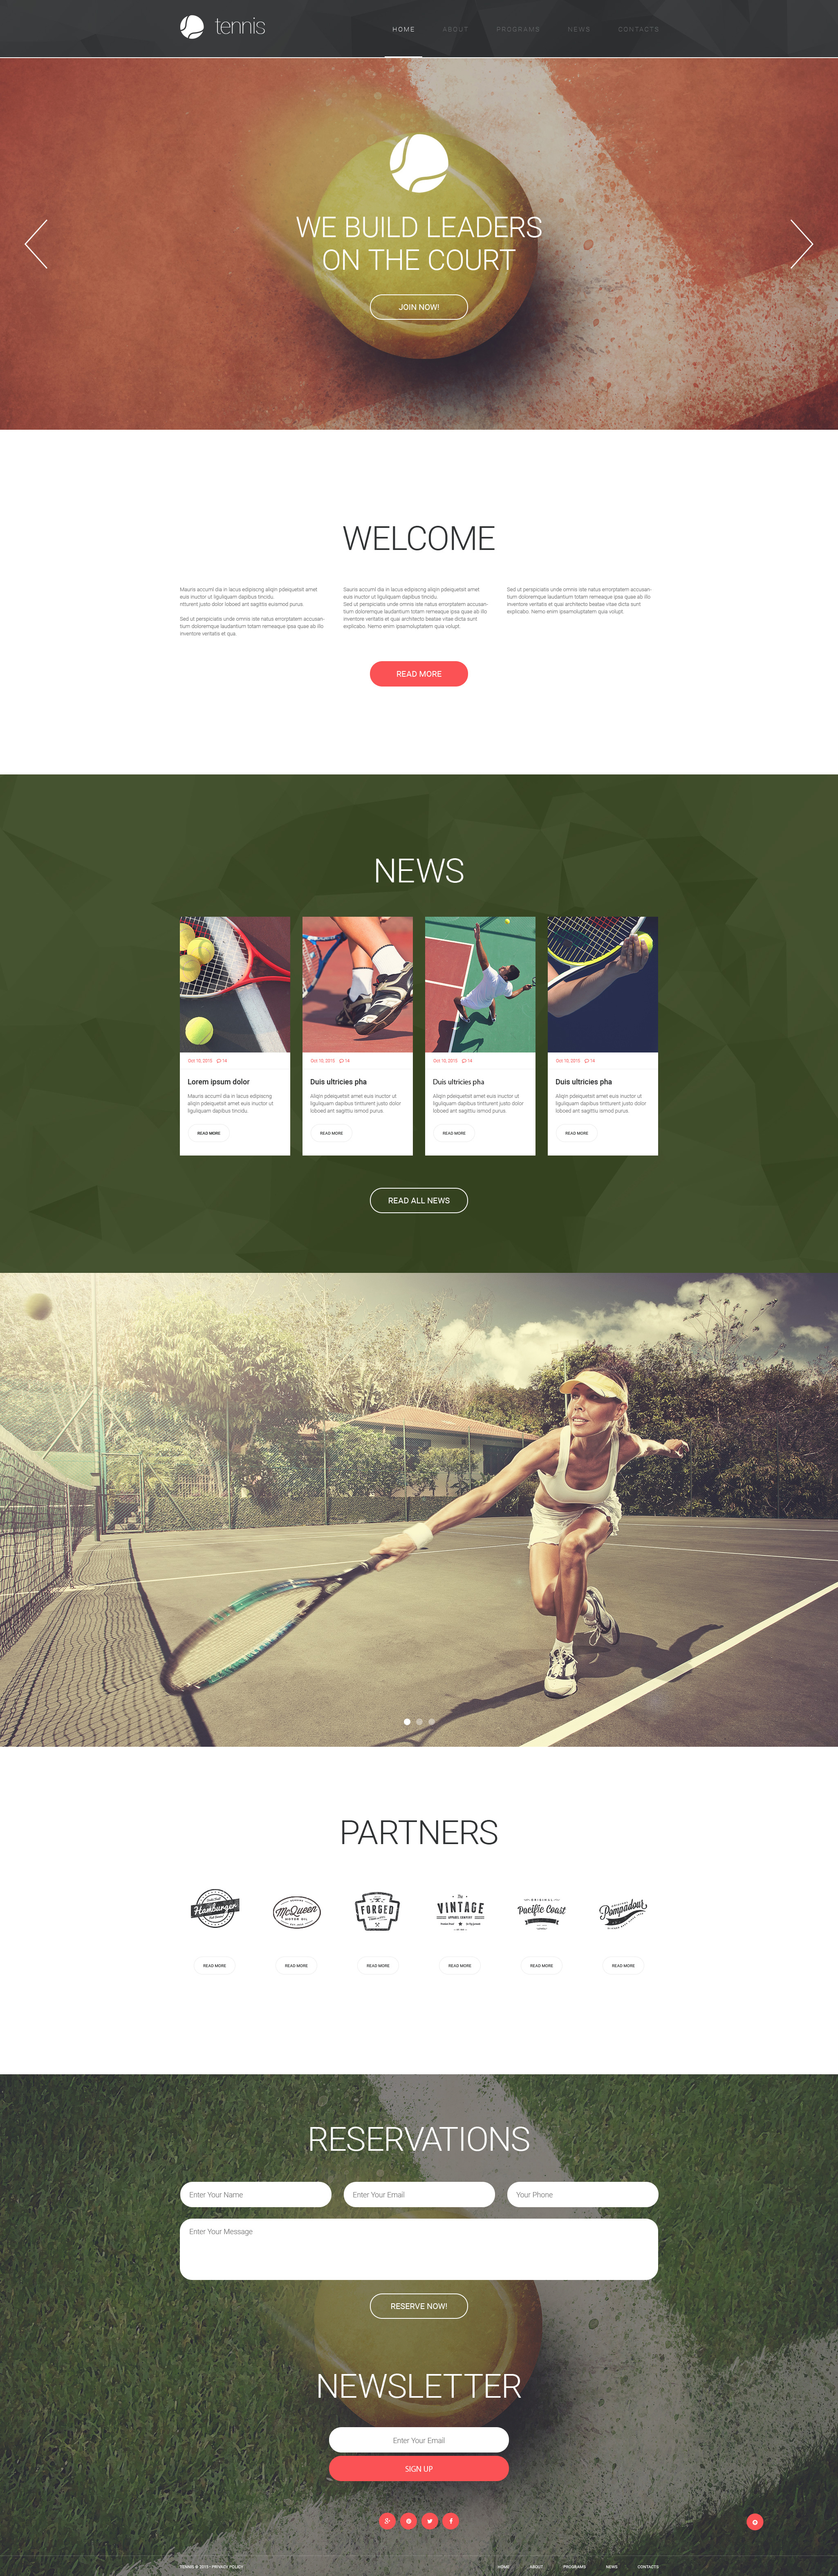 Tennis Responsive Website Template